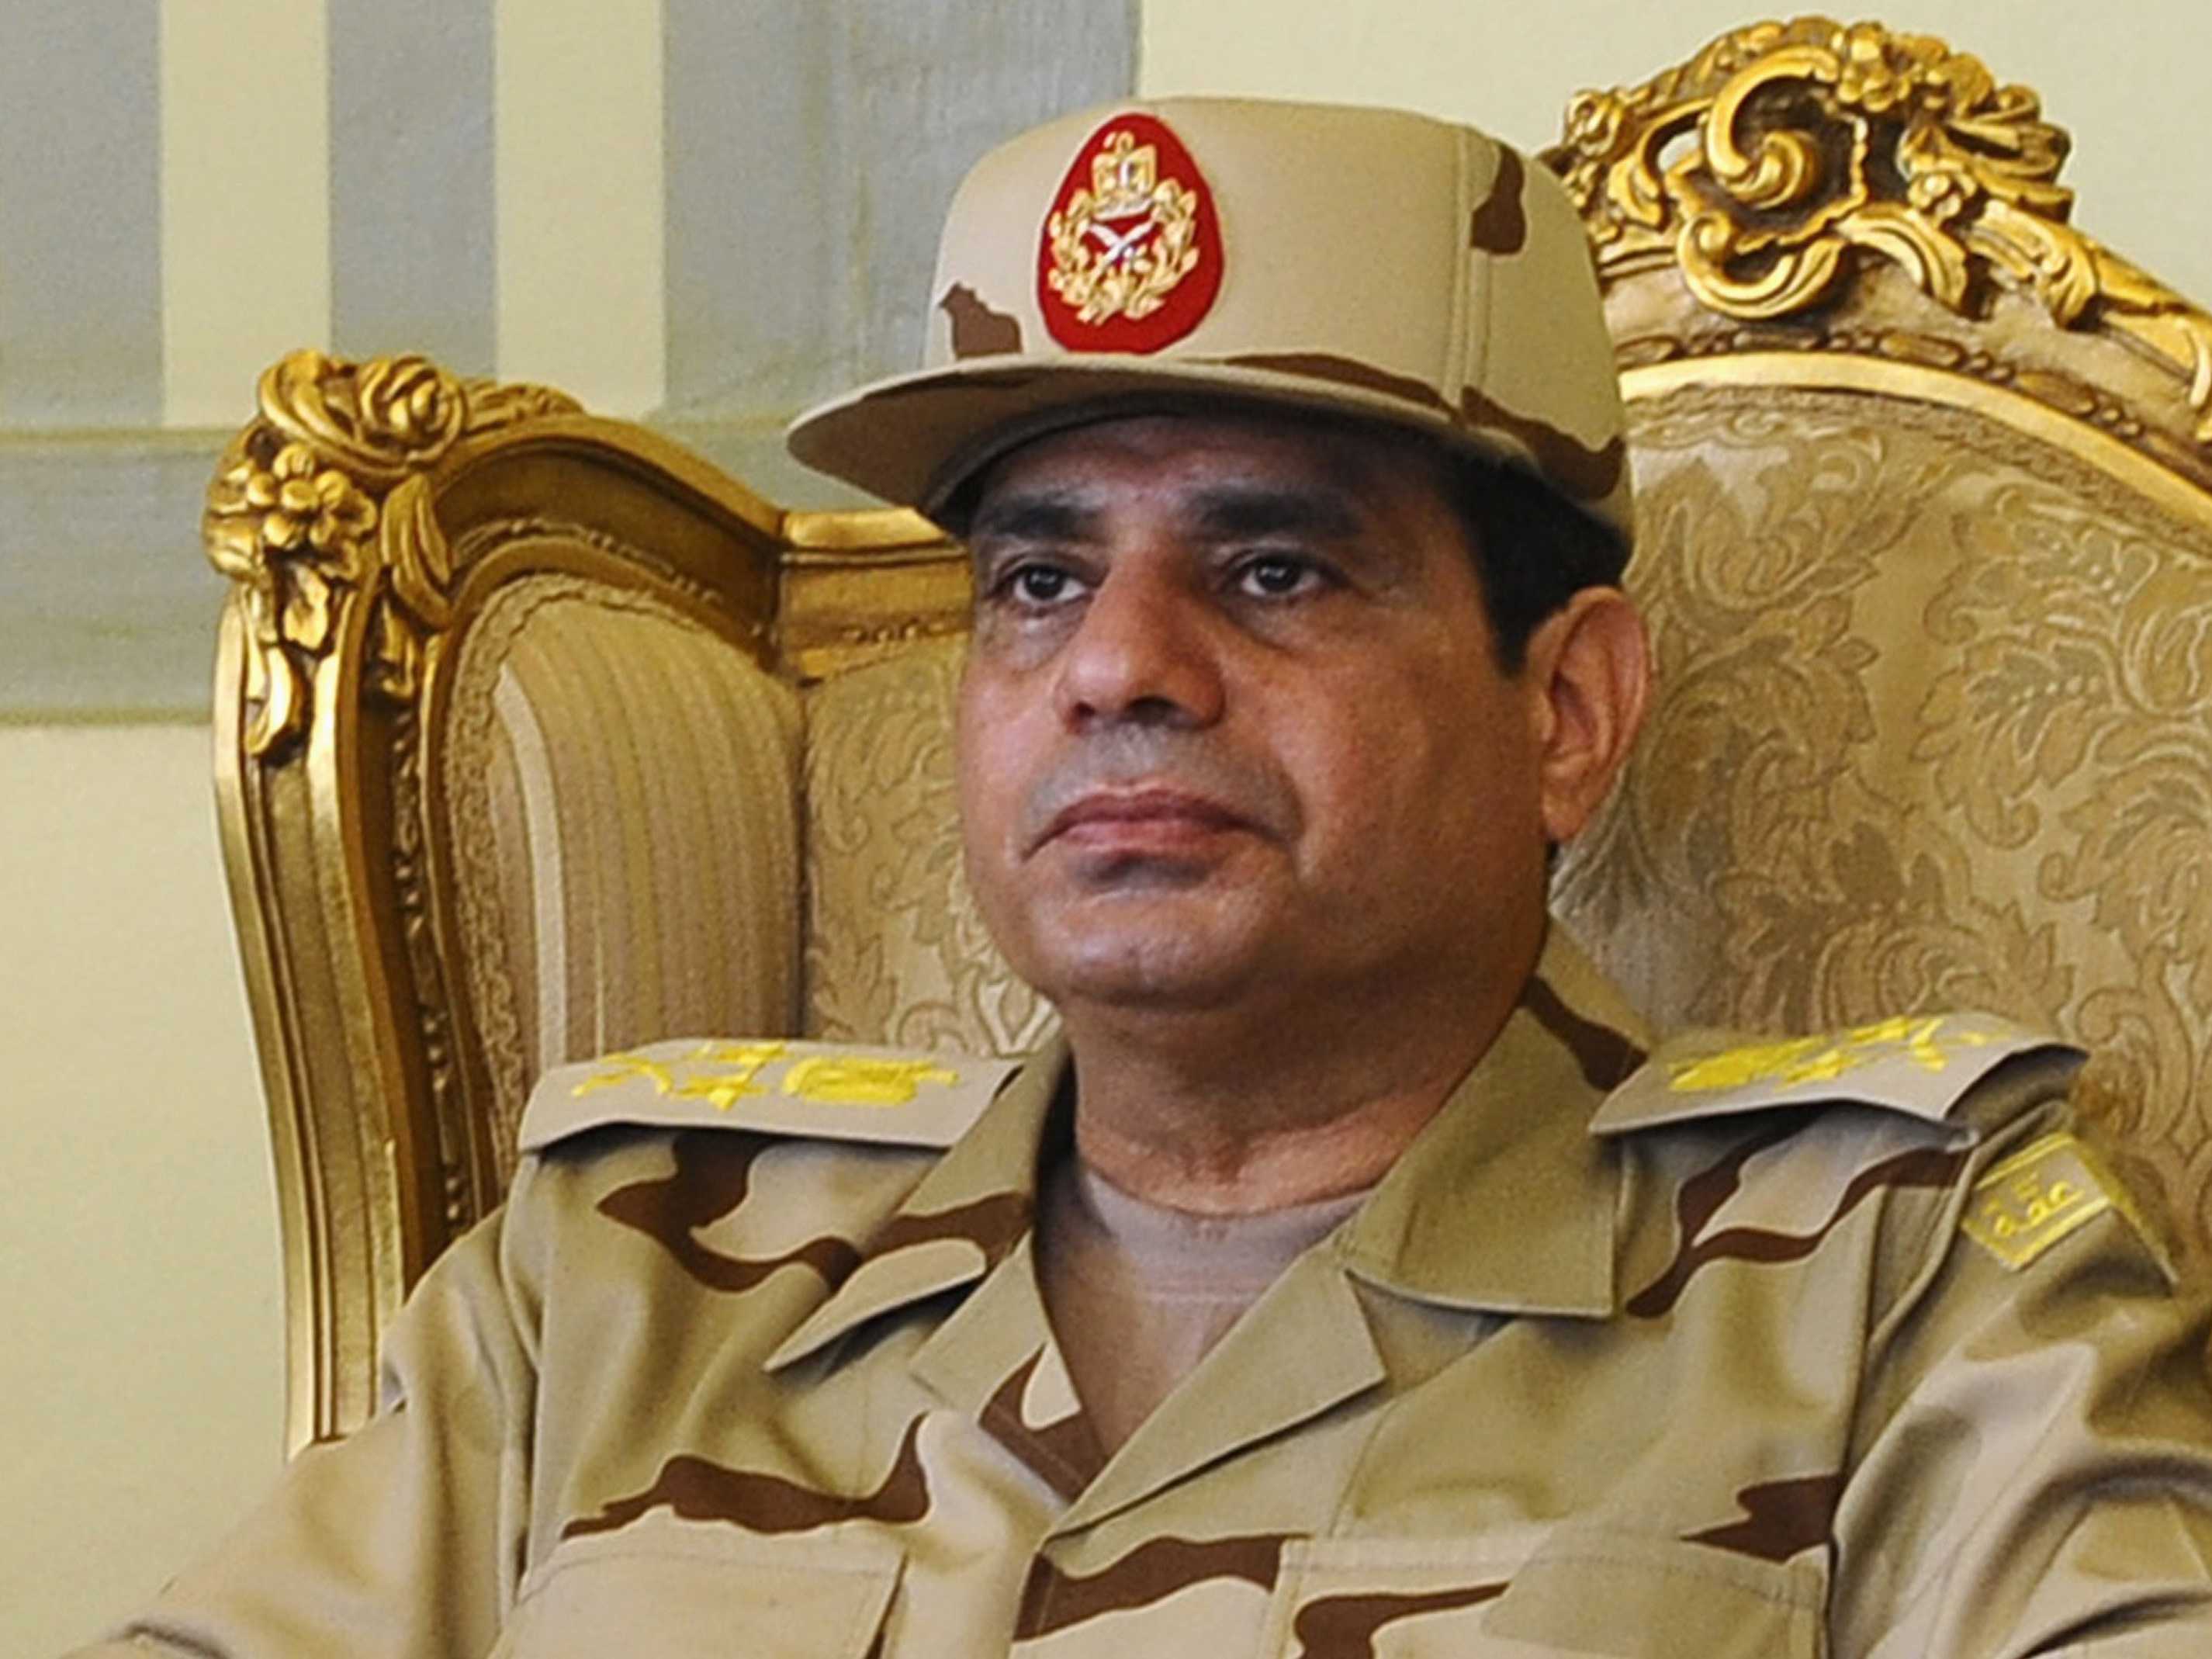 head-of-egyptian-military-has-ties-to-muslim-brotherhood-and-once-endorsed-virginity-checks-on-women